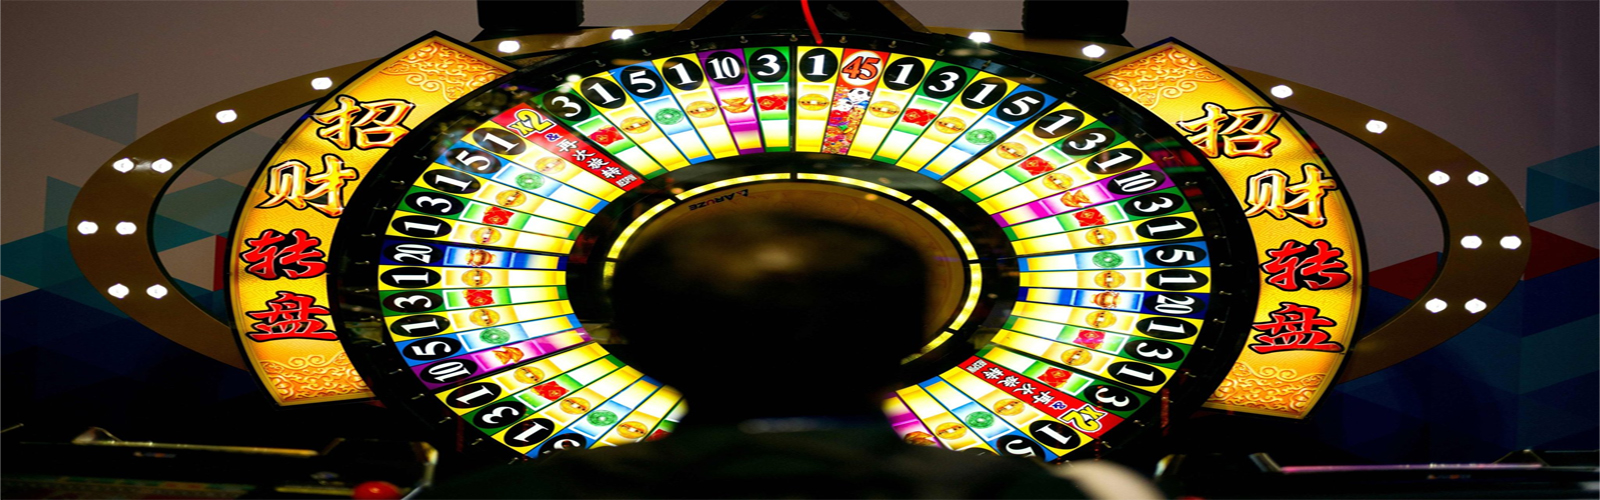 China’s casino hub Macau gambling revenue rises 18 pct in March